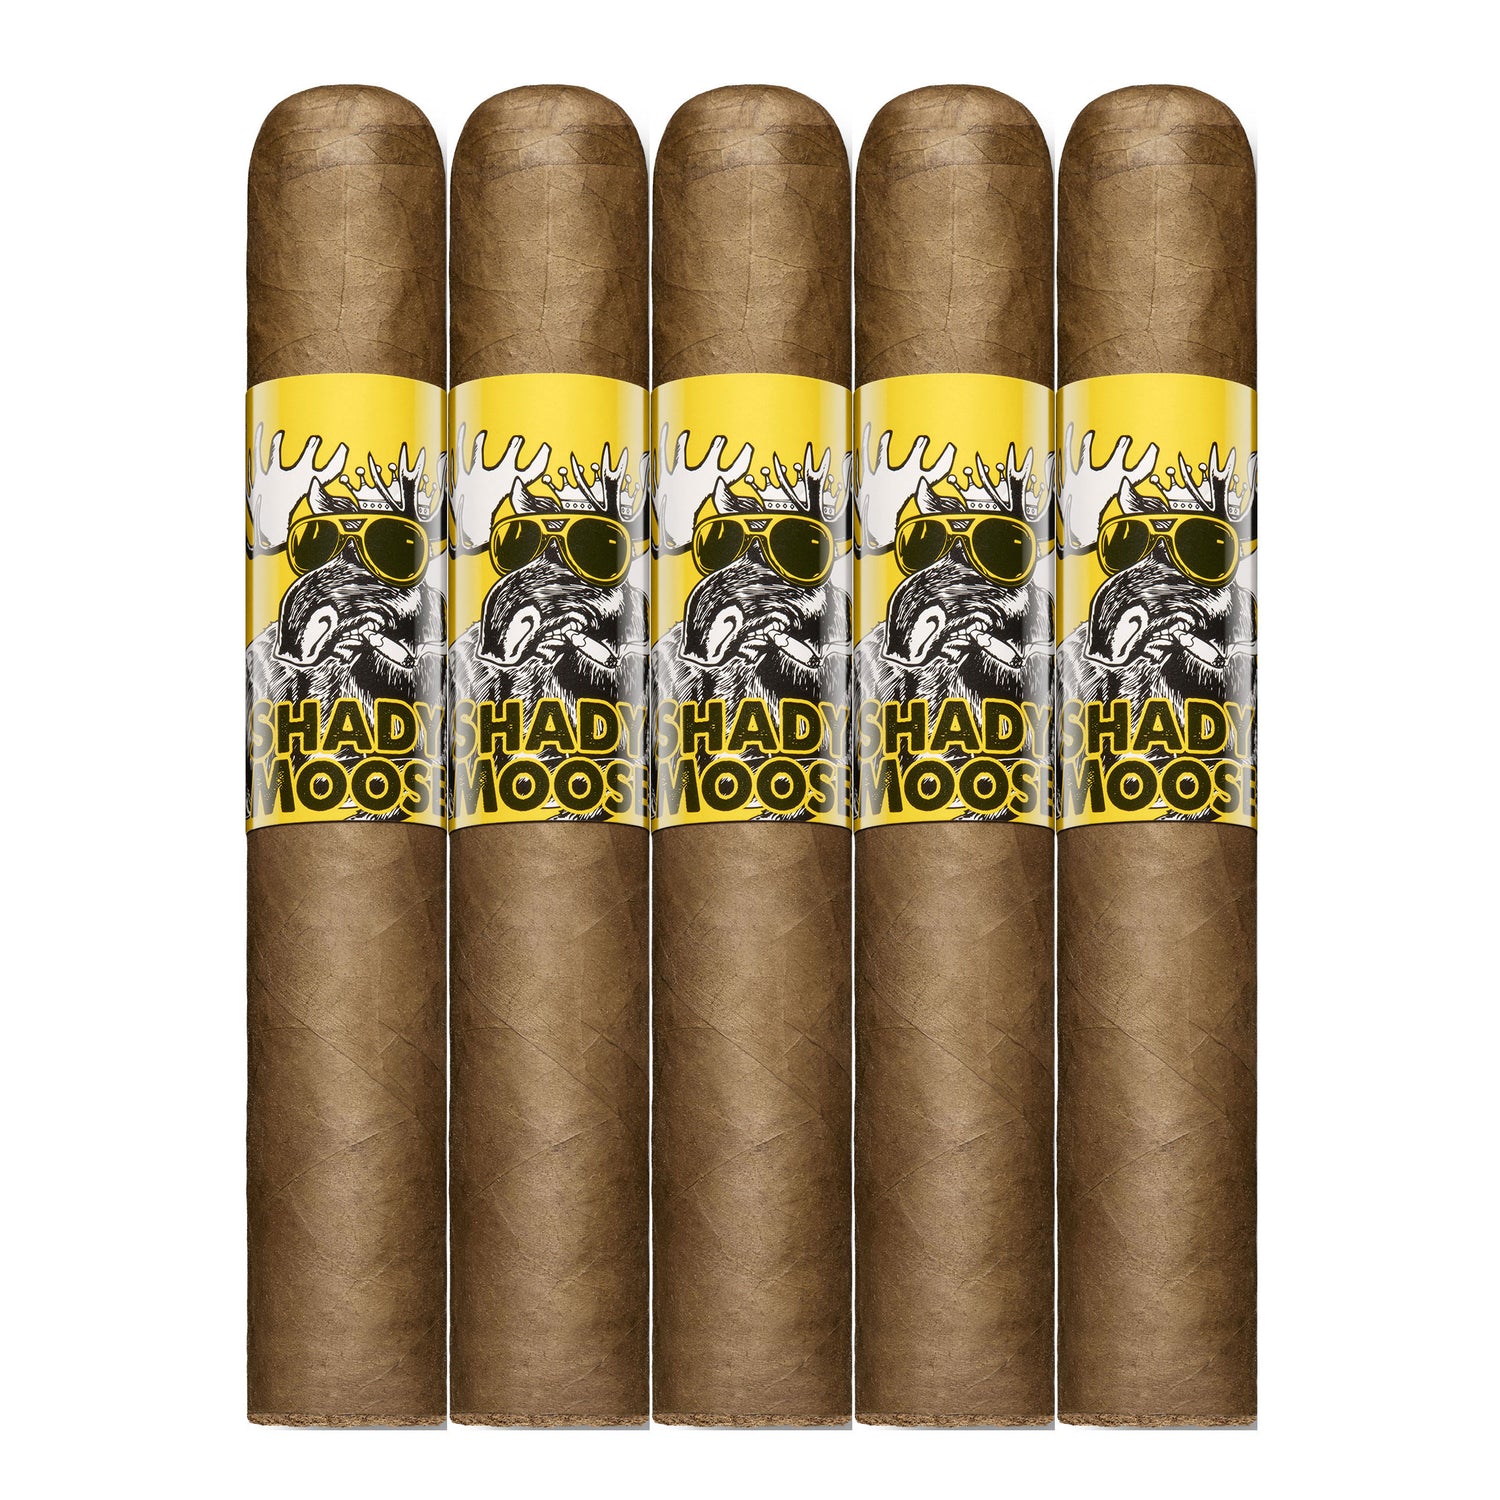 Shady Moose Gigante Cigars